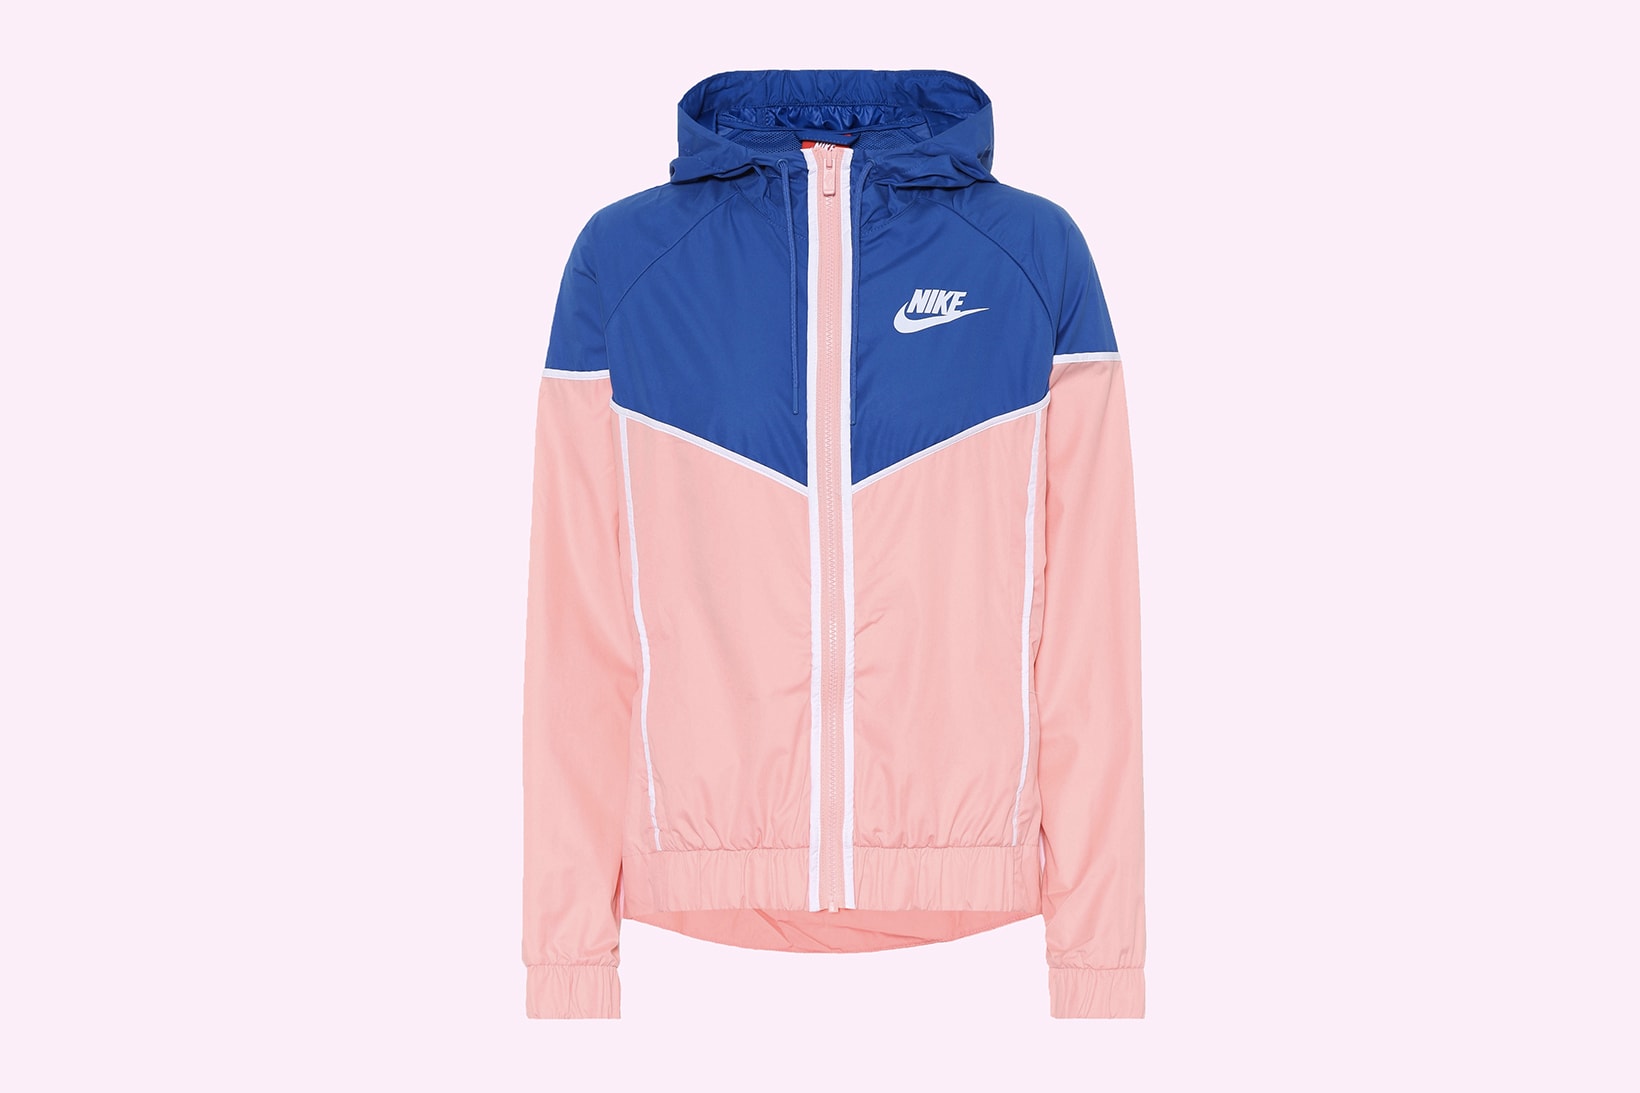 Nike Pastel Pink Blue Retro Windbreaker Jacket Women's Wmns Athleisure Sporty Vintage Where to Buy Mytheresa.com